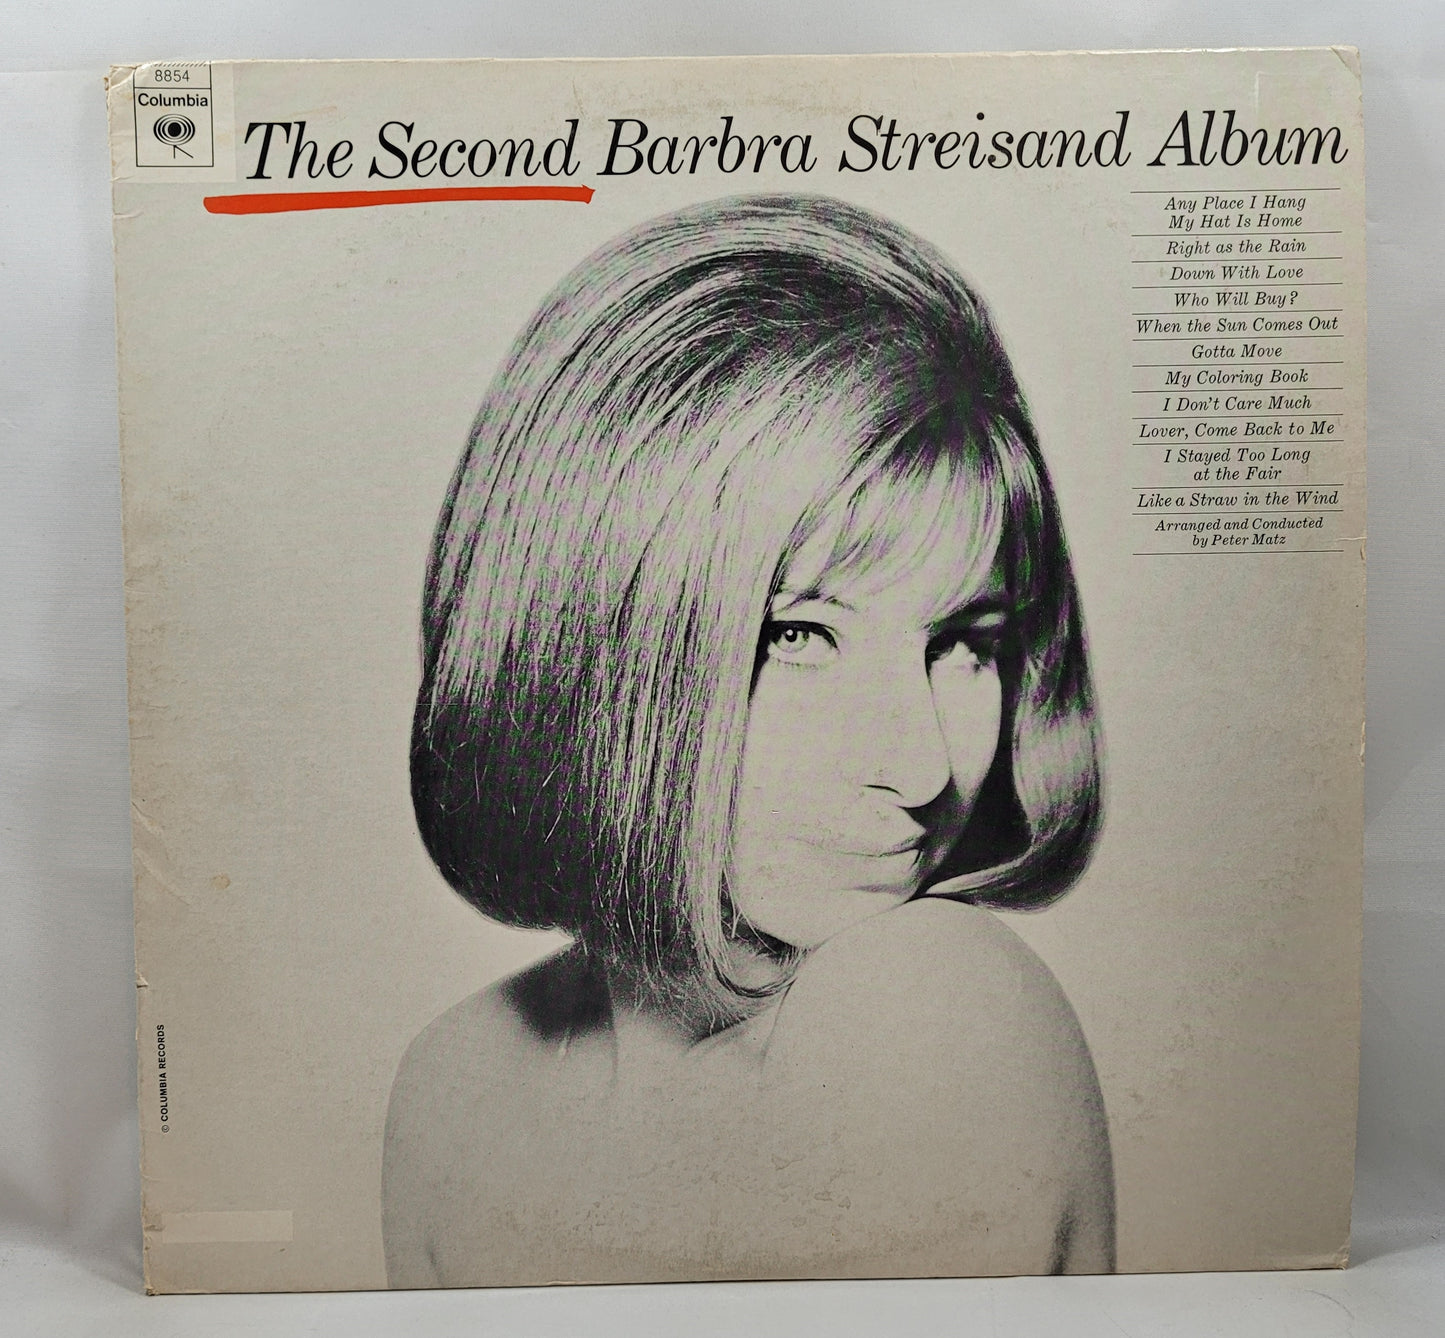 Barbra Streisand - The Second Barbra Streisand Album [Reissue] [Used Vinyl Record LP]